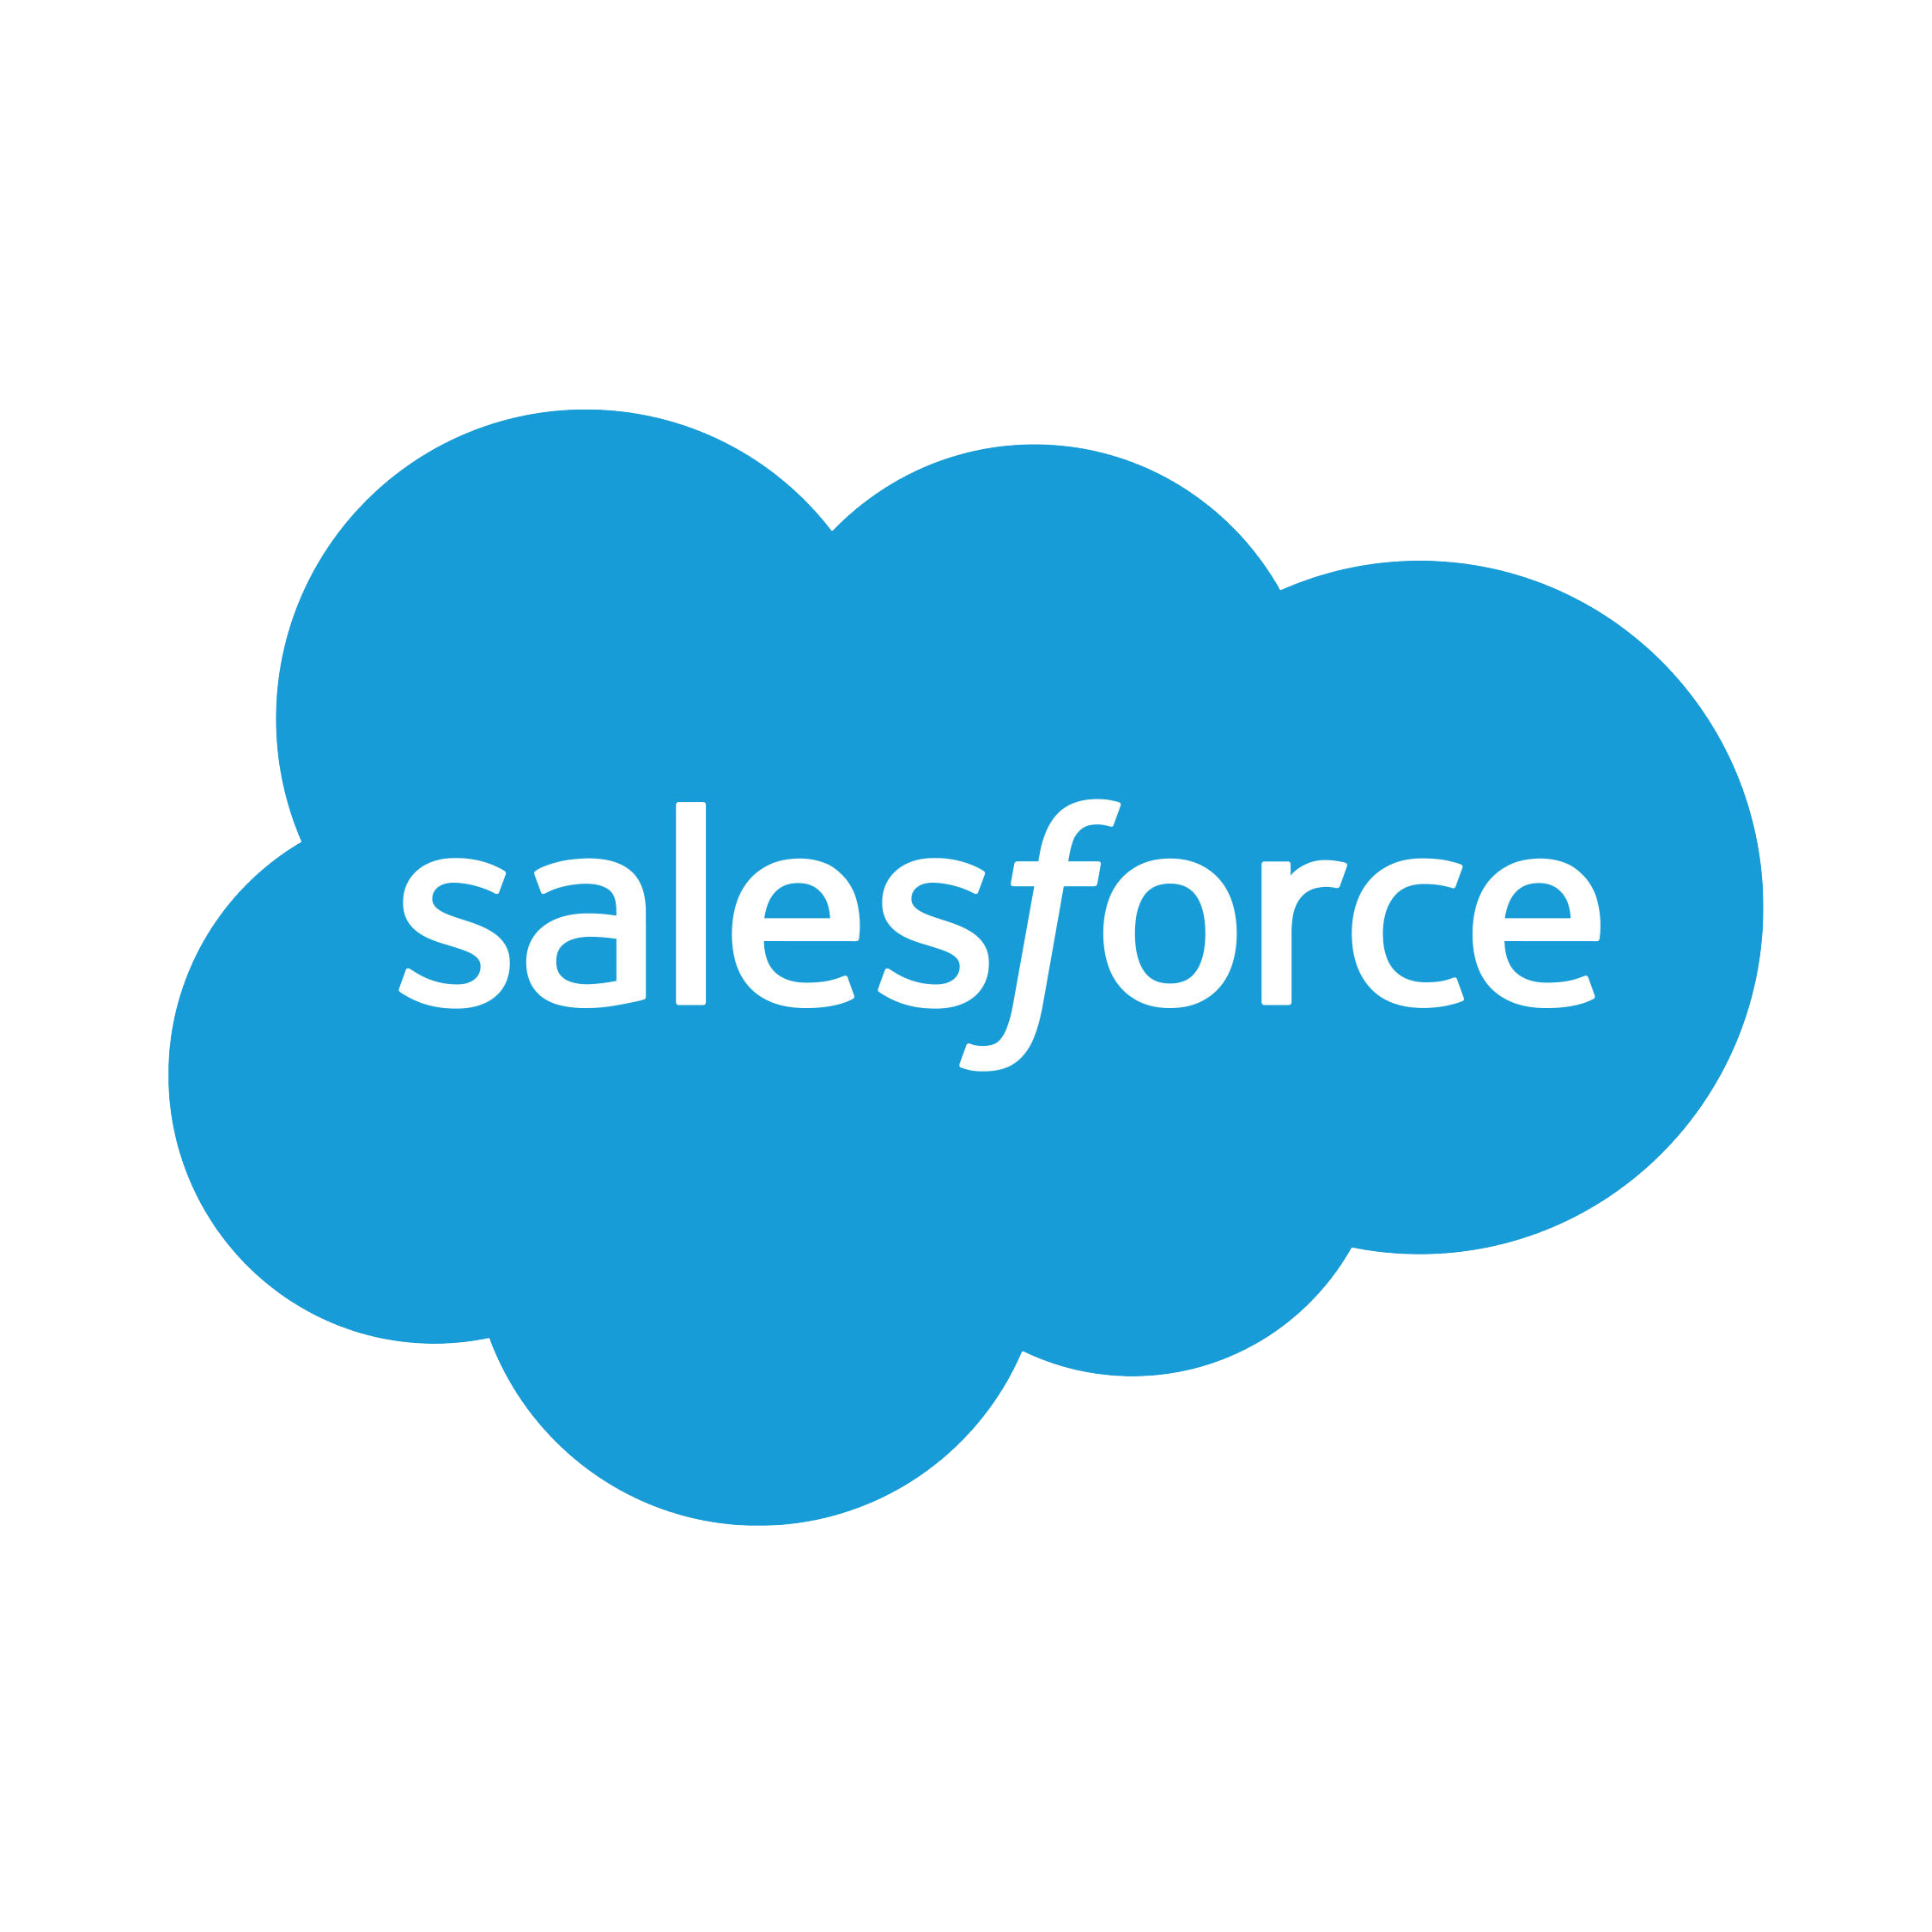 salesforce-logo-1x1